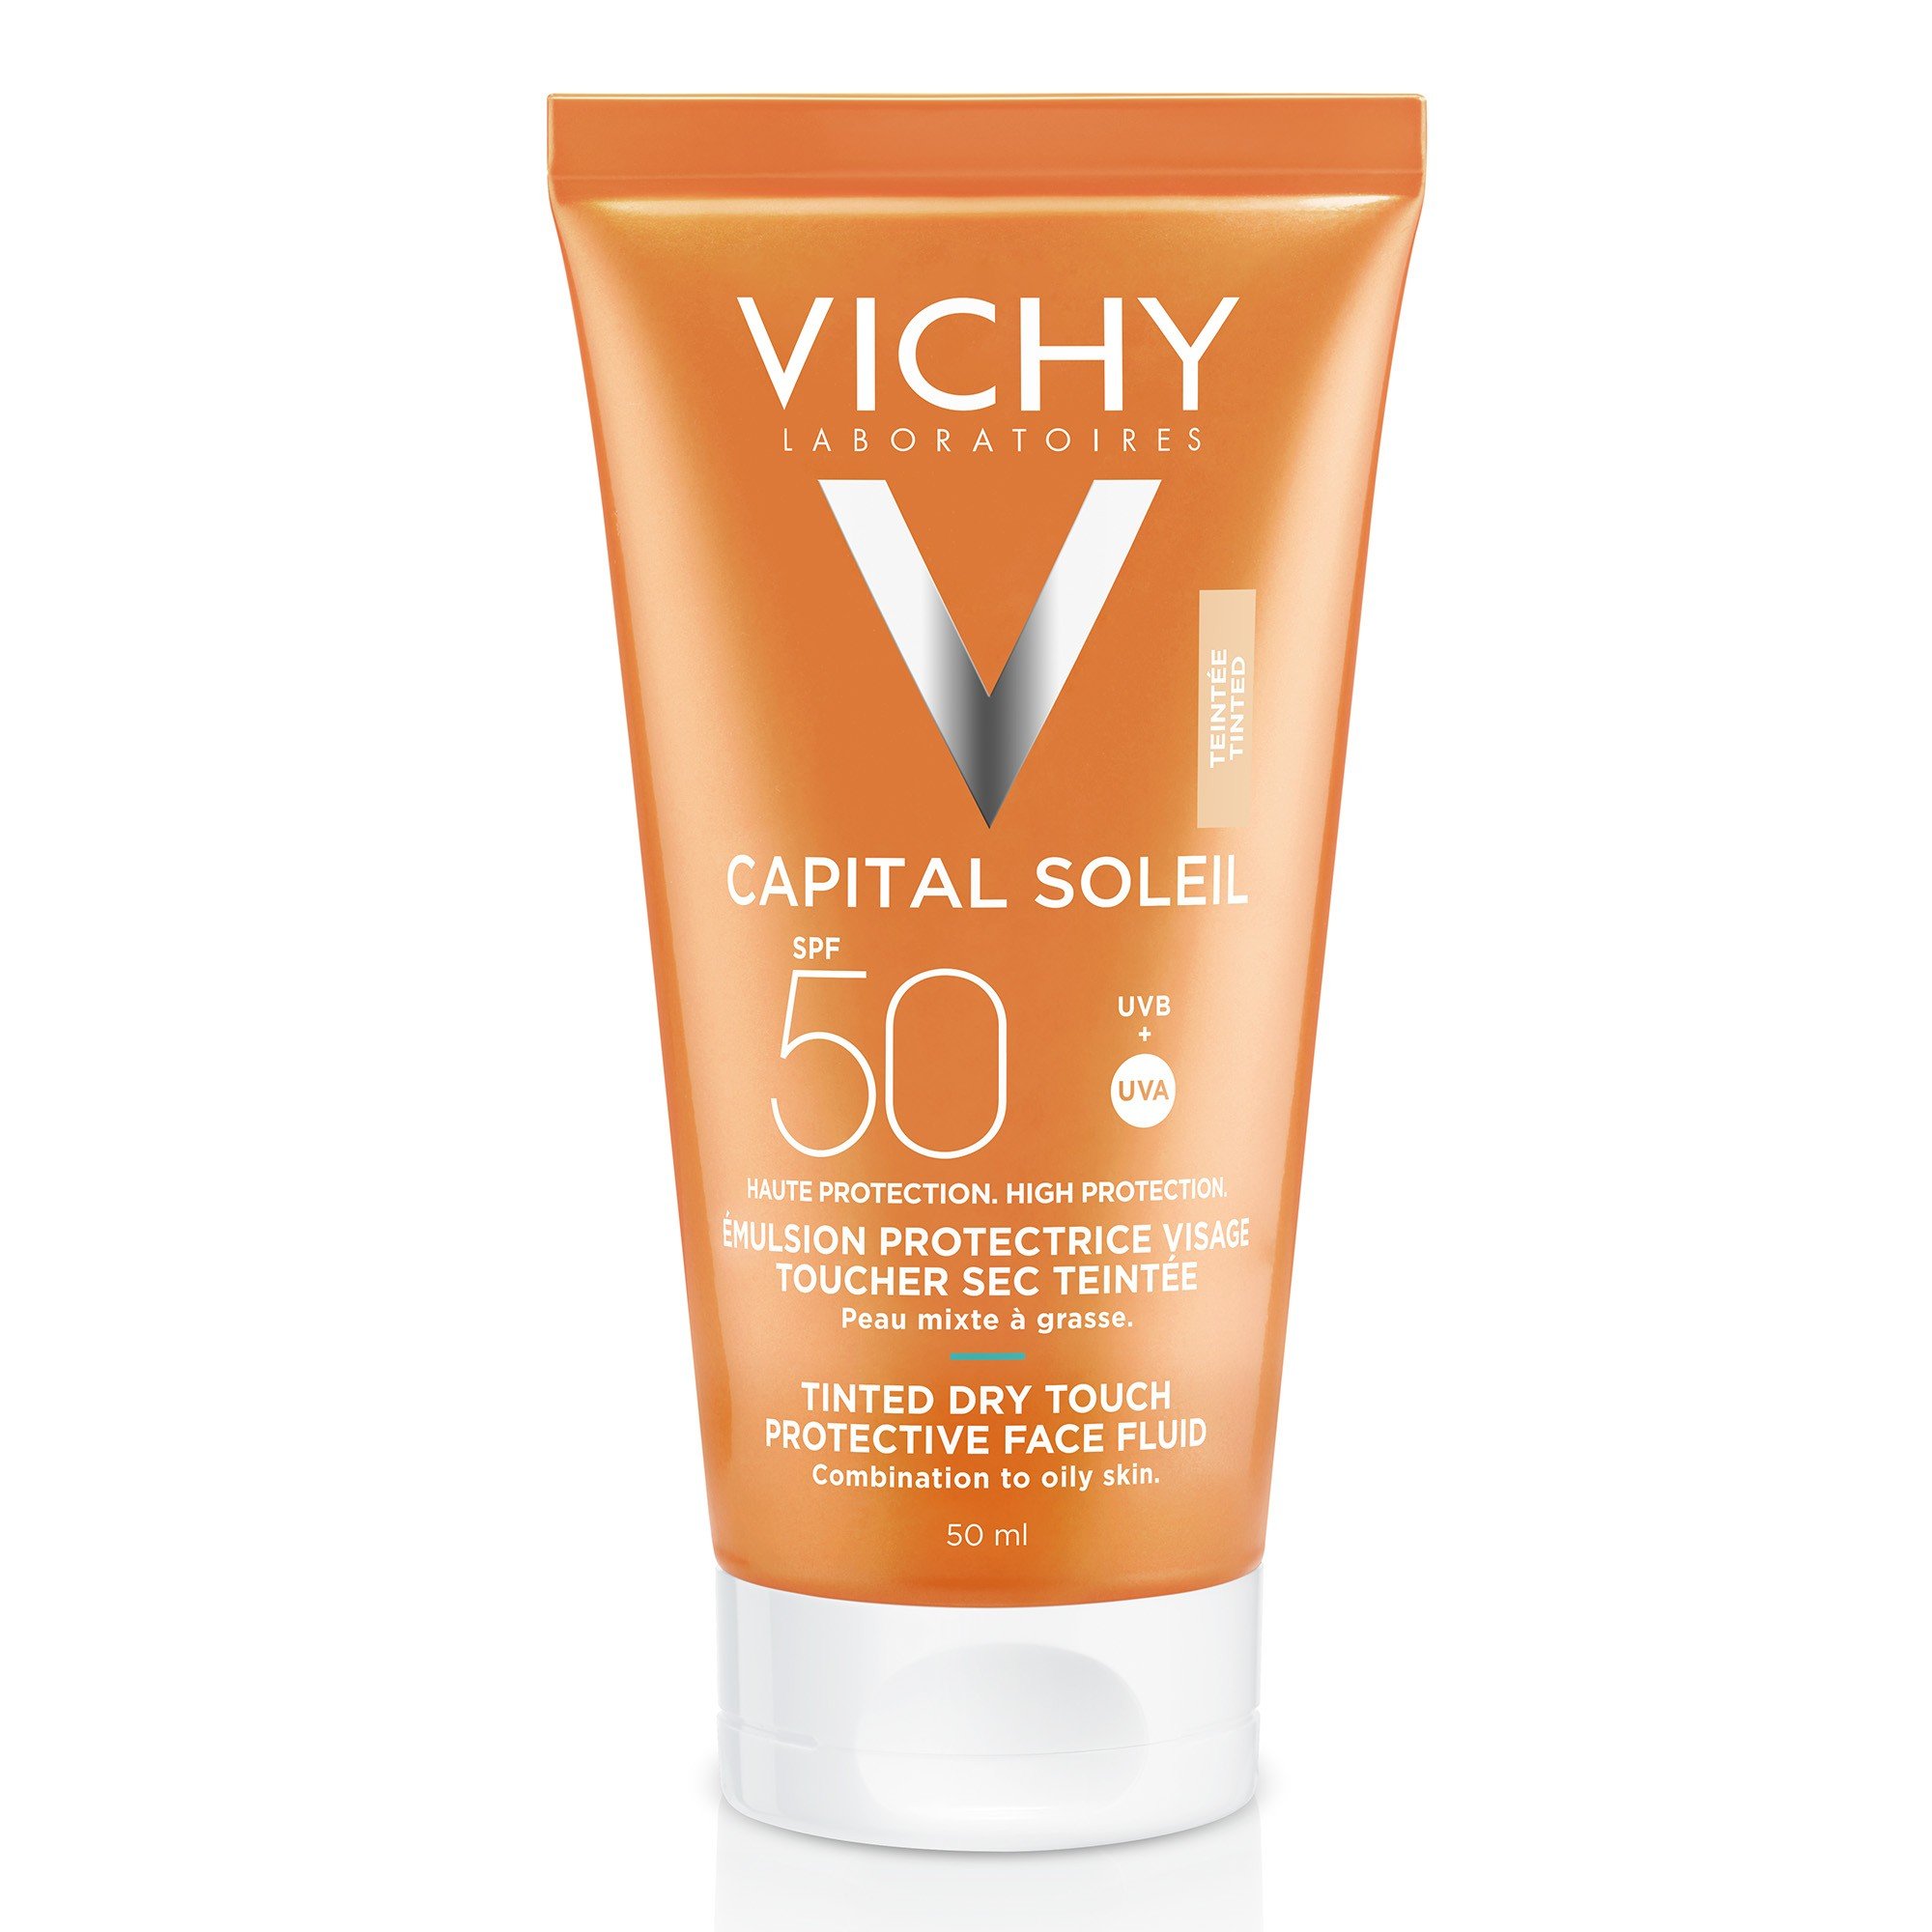 Vichy Ideal Soleil BB Emulsión Color SPF50, 50ml